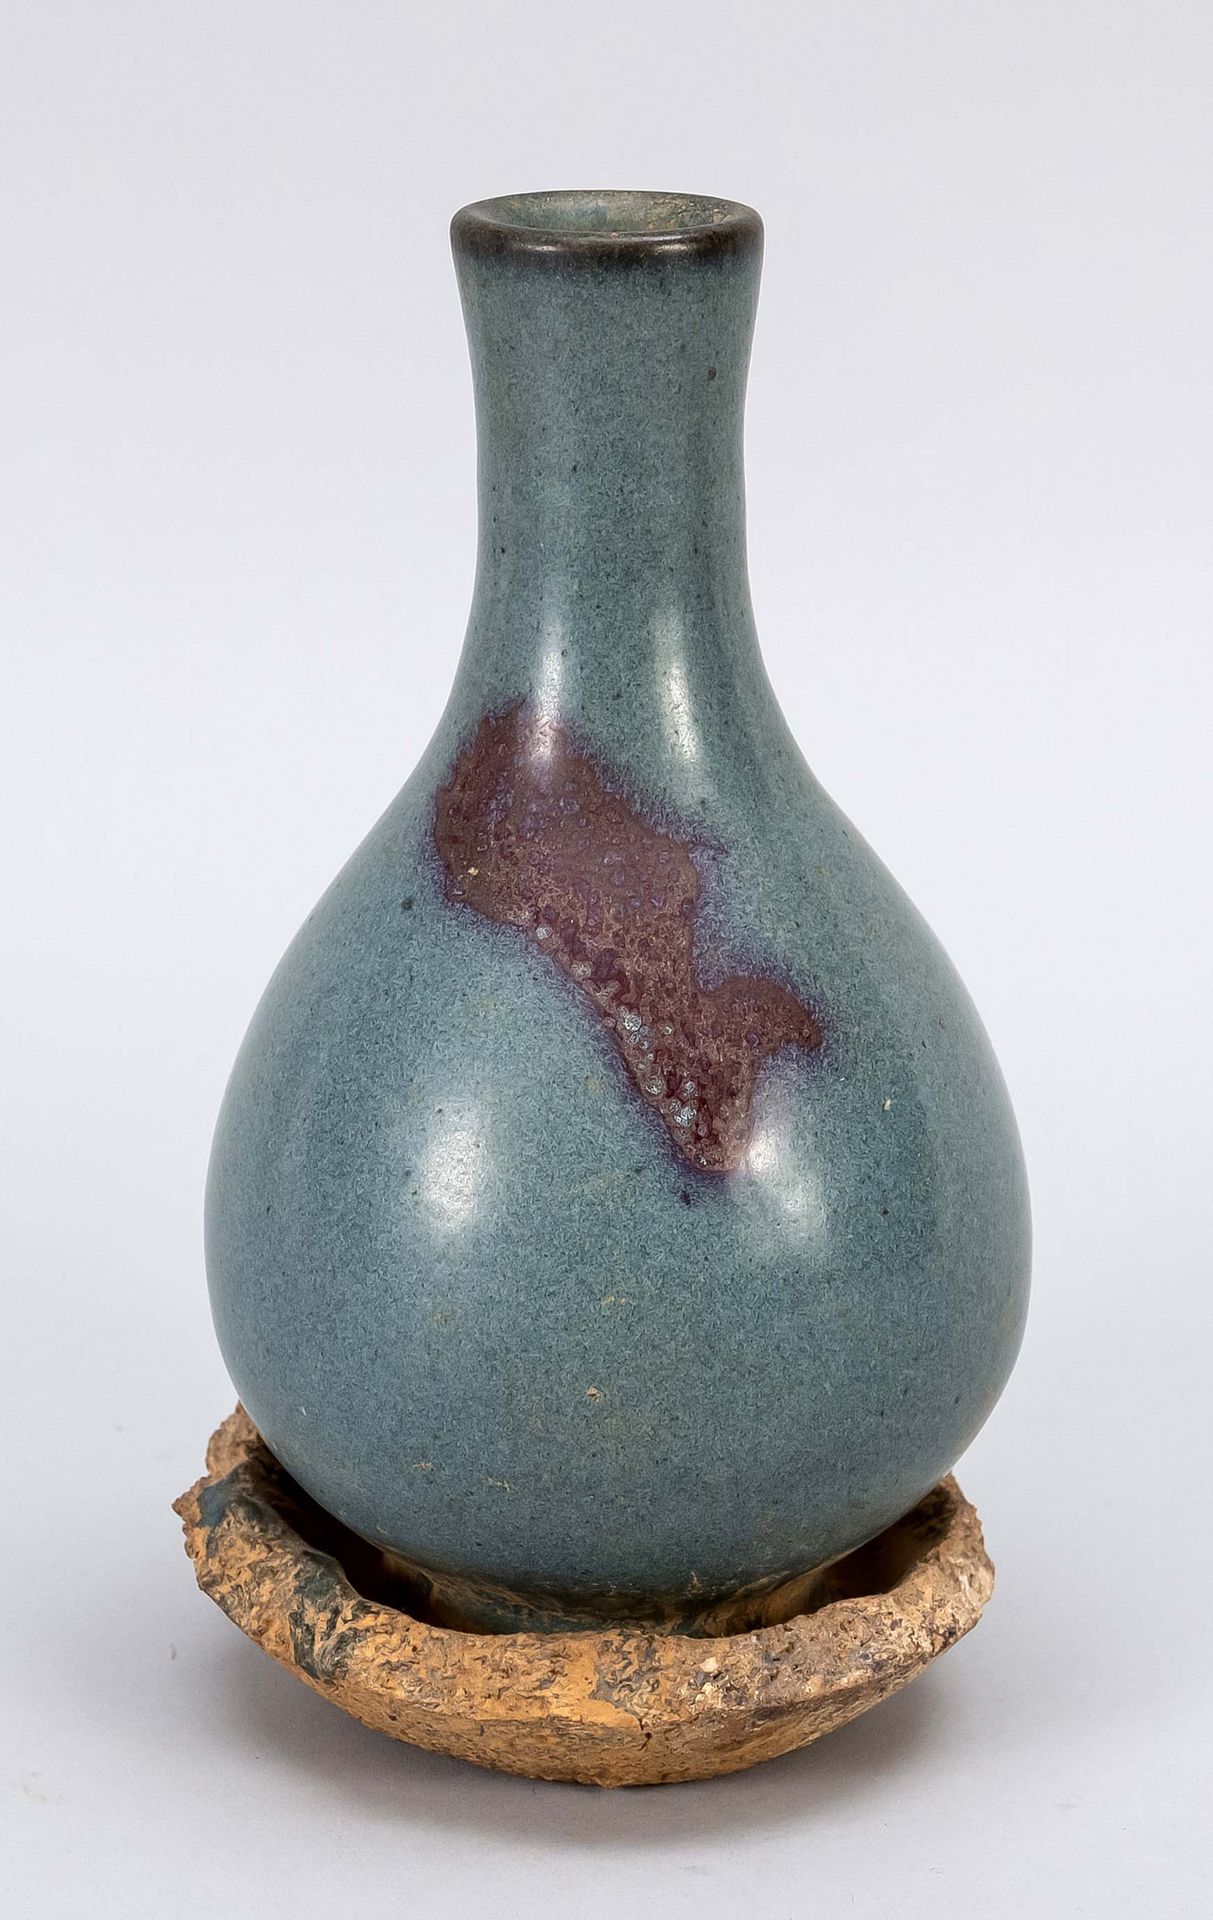 Null 梨形青瓷花瓶，中国，炻器，鸽子蓝的垃圾釉，有特色的紫罗兰斑点，一个火碗坐在器皿底部，高20厘米，宽11厘米